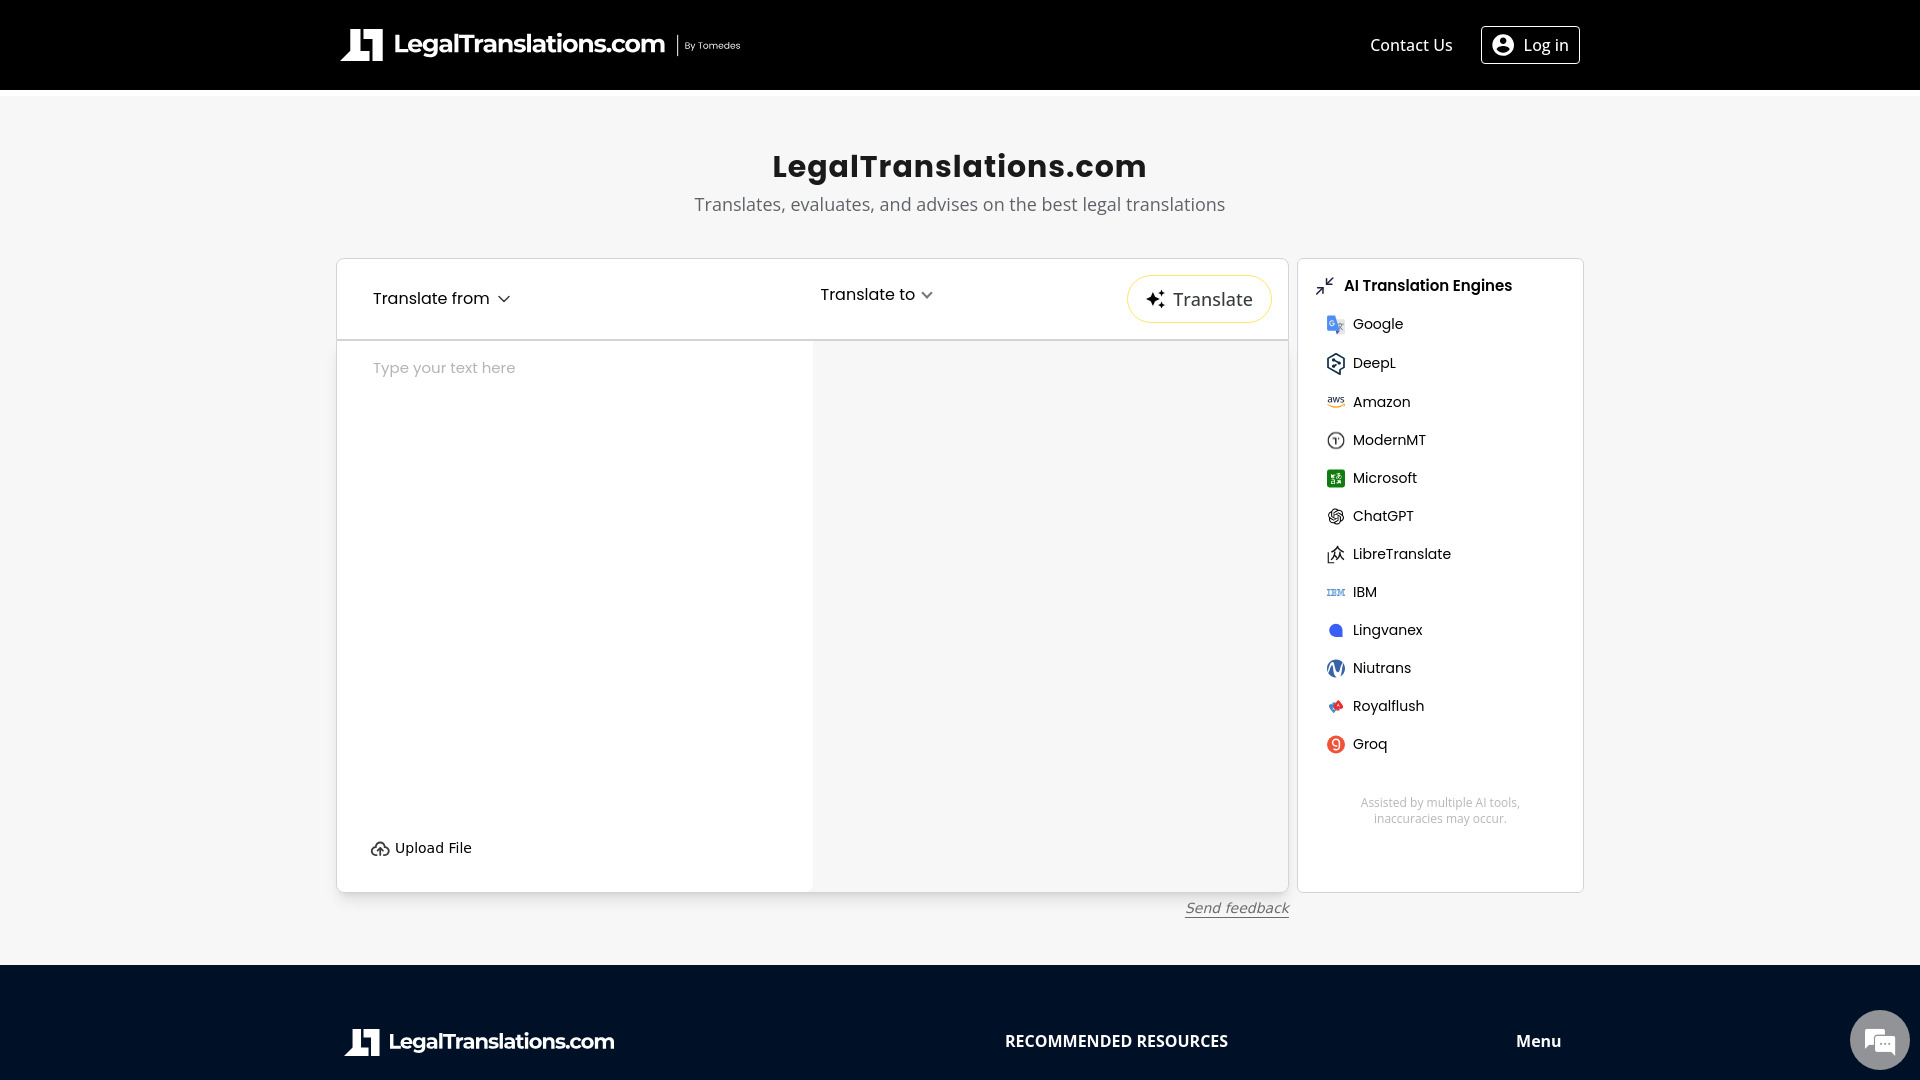 موقع LegalTranslations.com